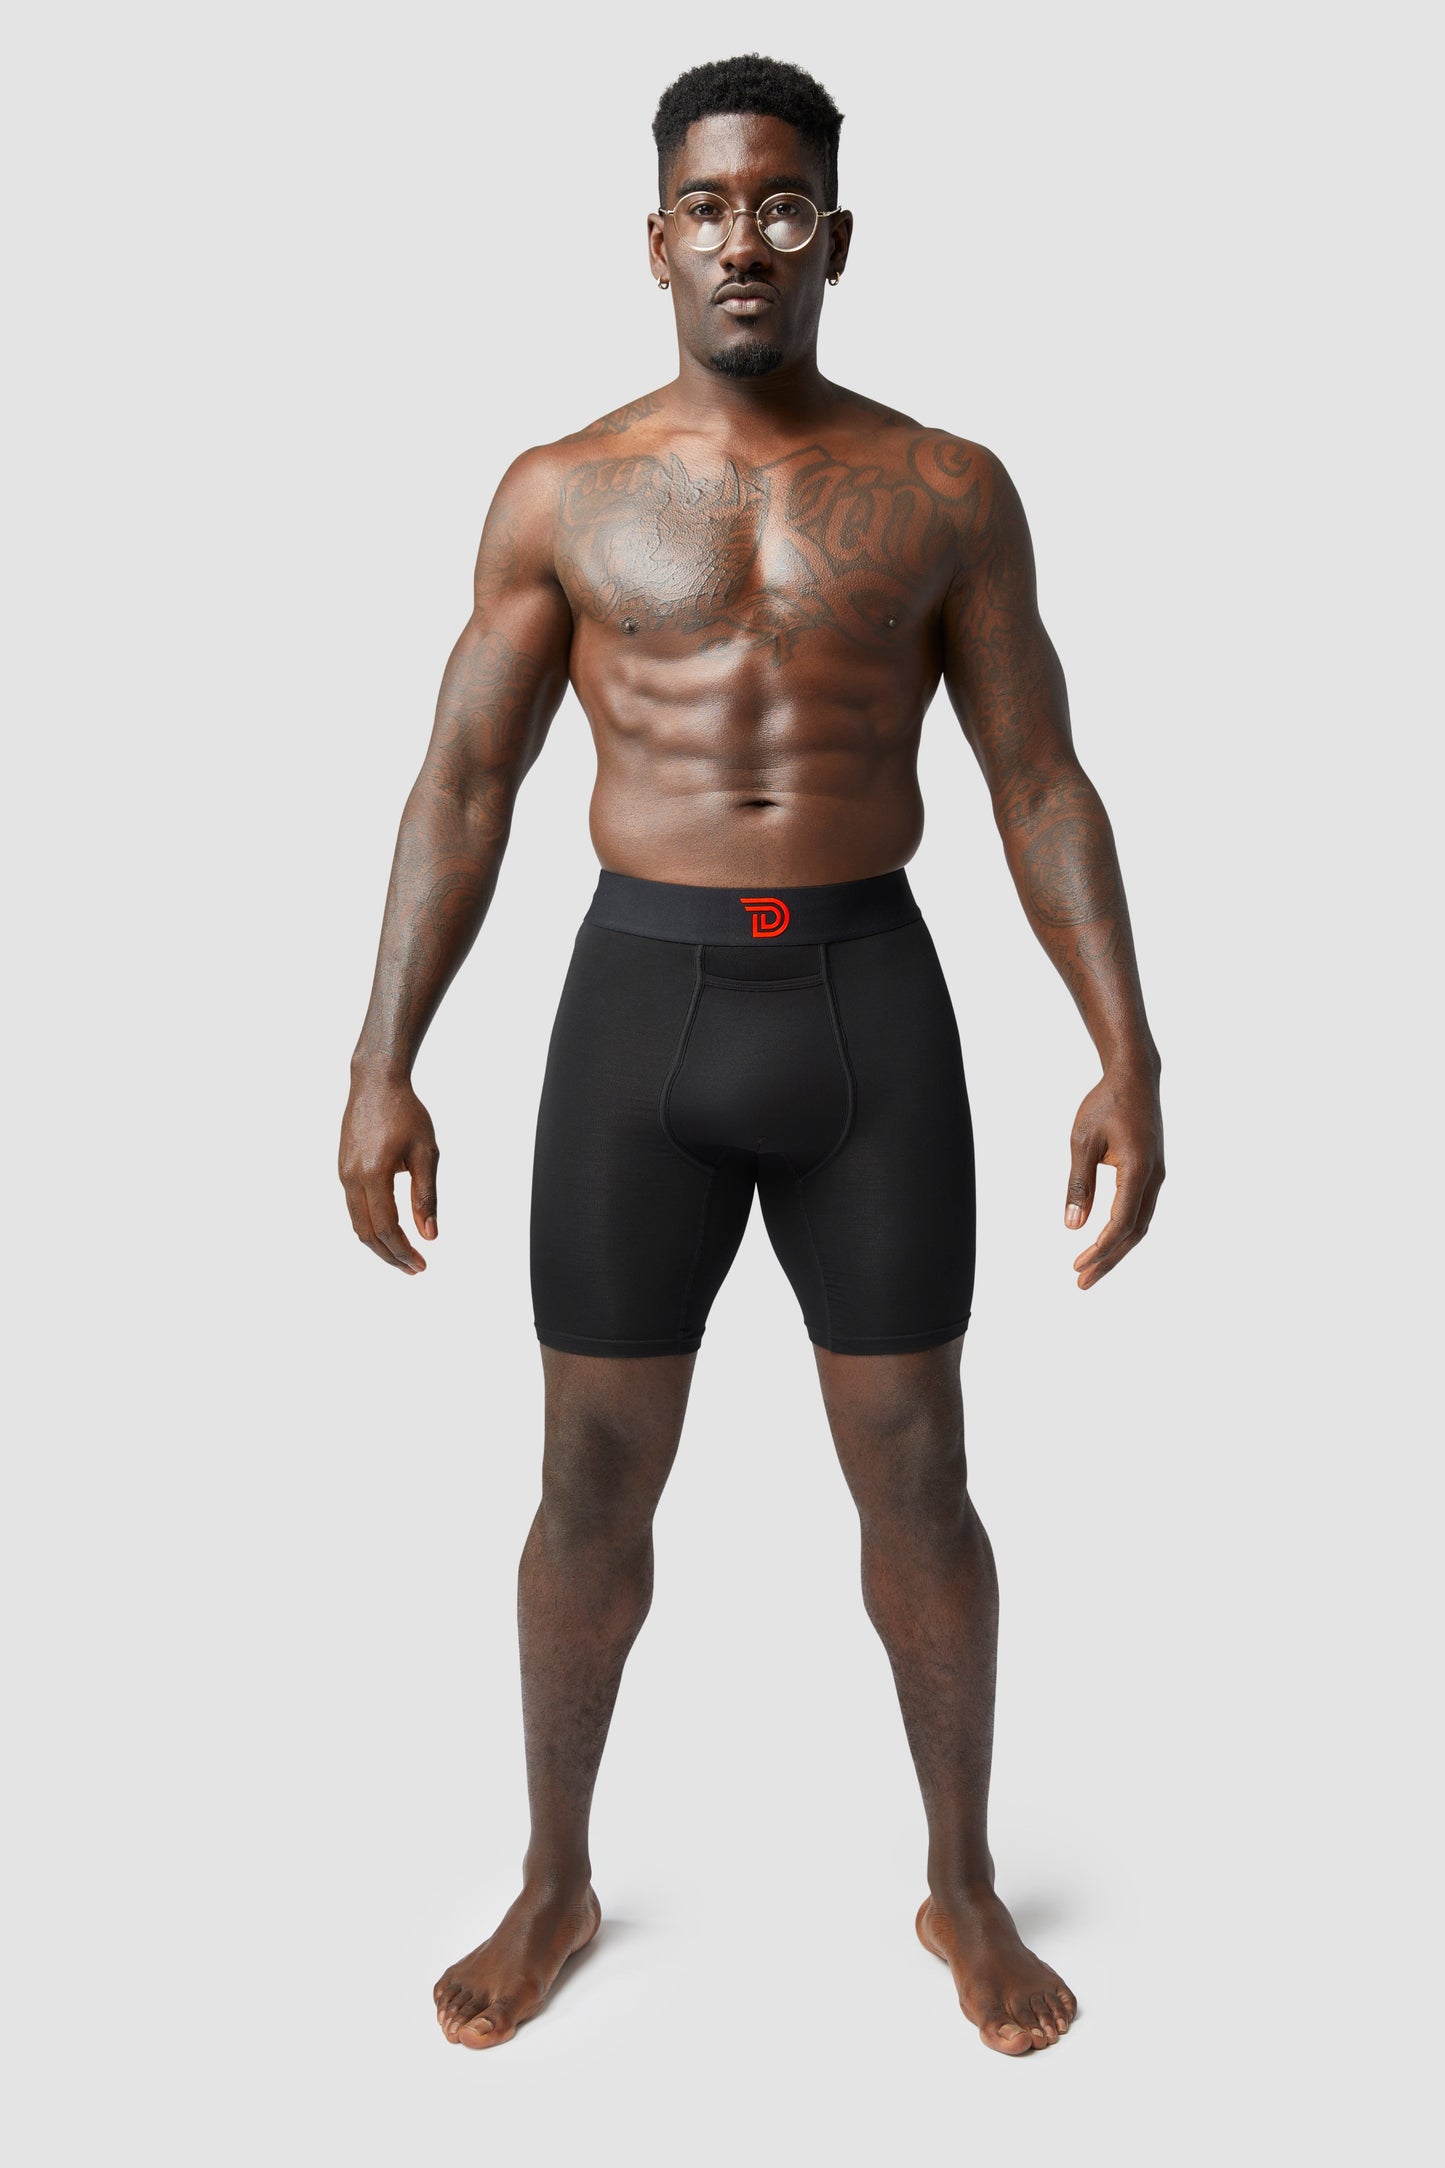 Drawlz Brand Co. , LLC Originalz OG'z OriginalZ Black OG'z Men's Boxer Brief Underwear 